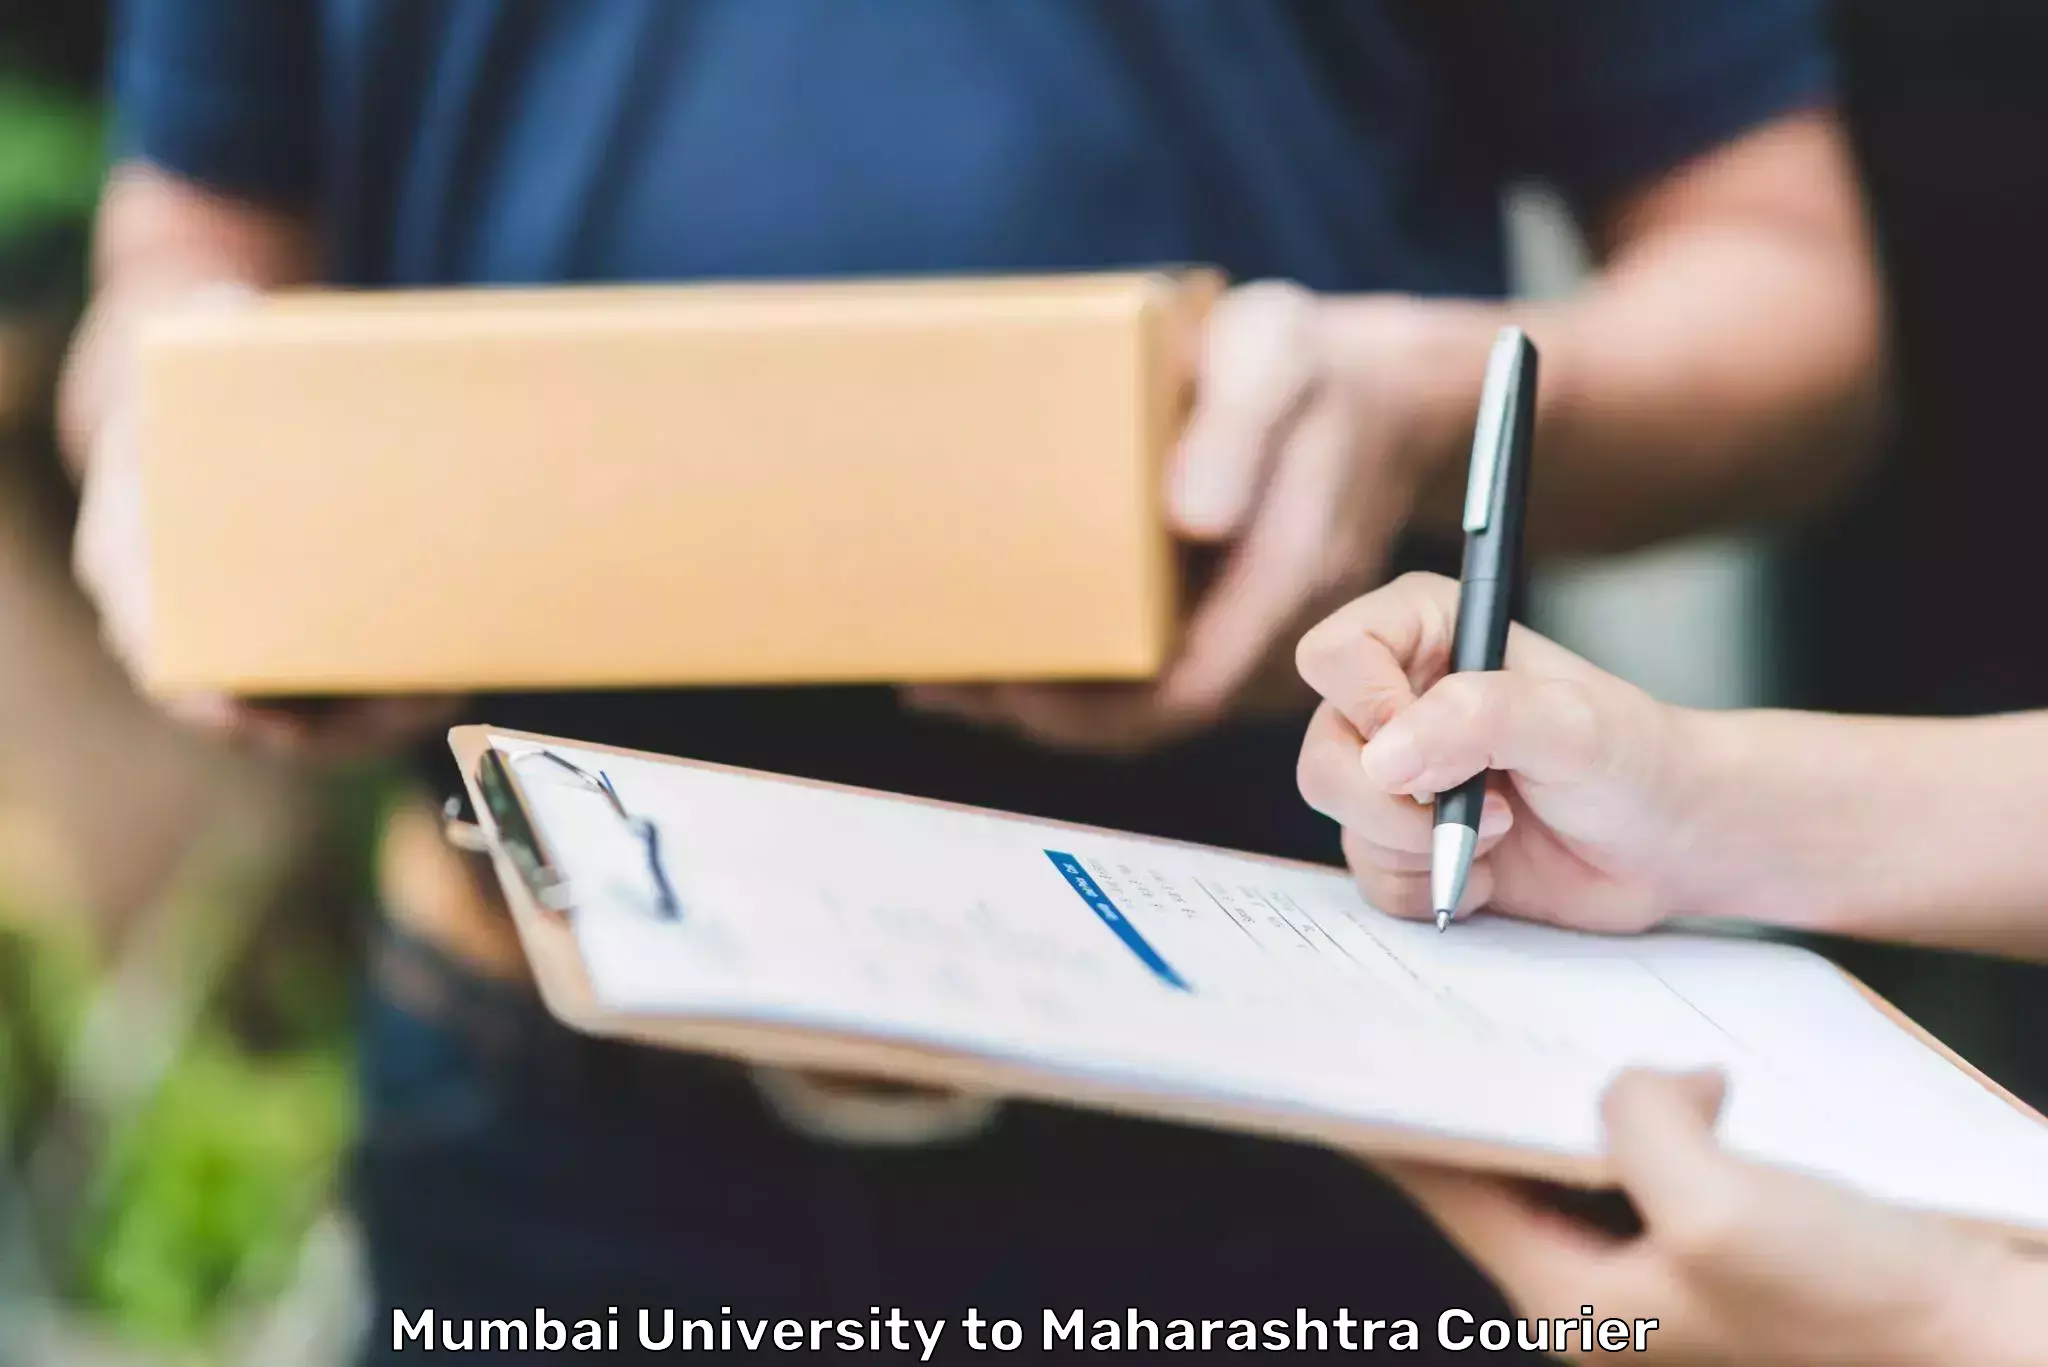 Premium courier solutions Mumbai University to Hinganghat